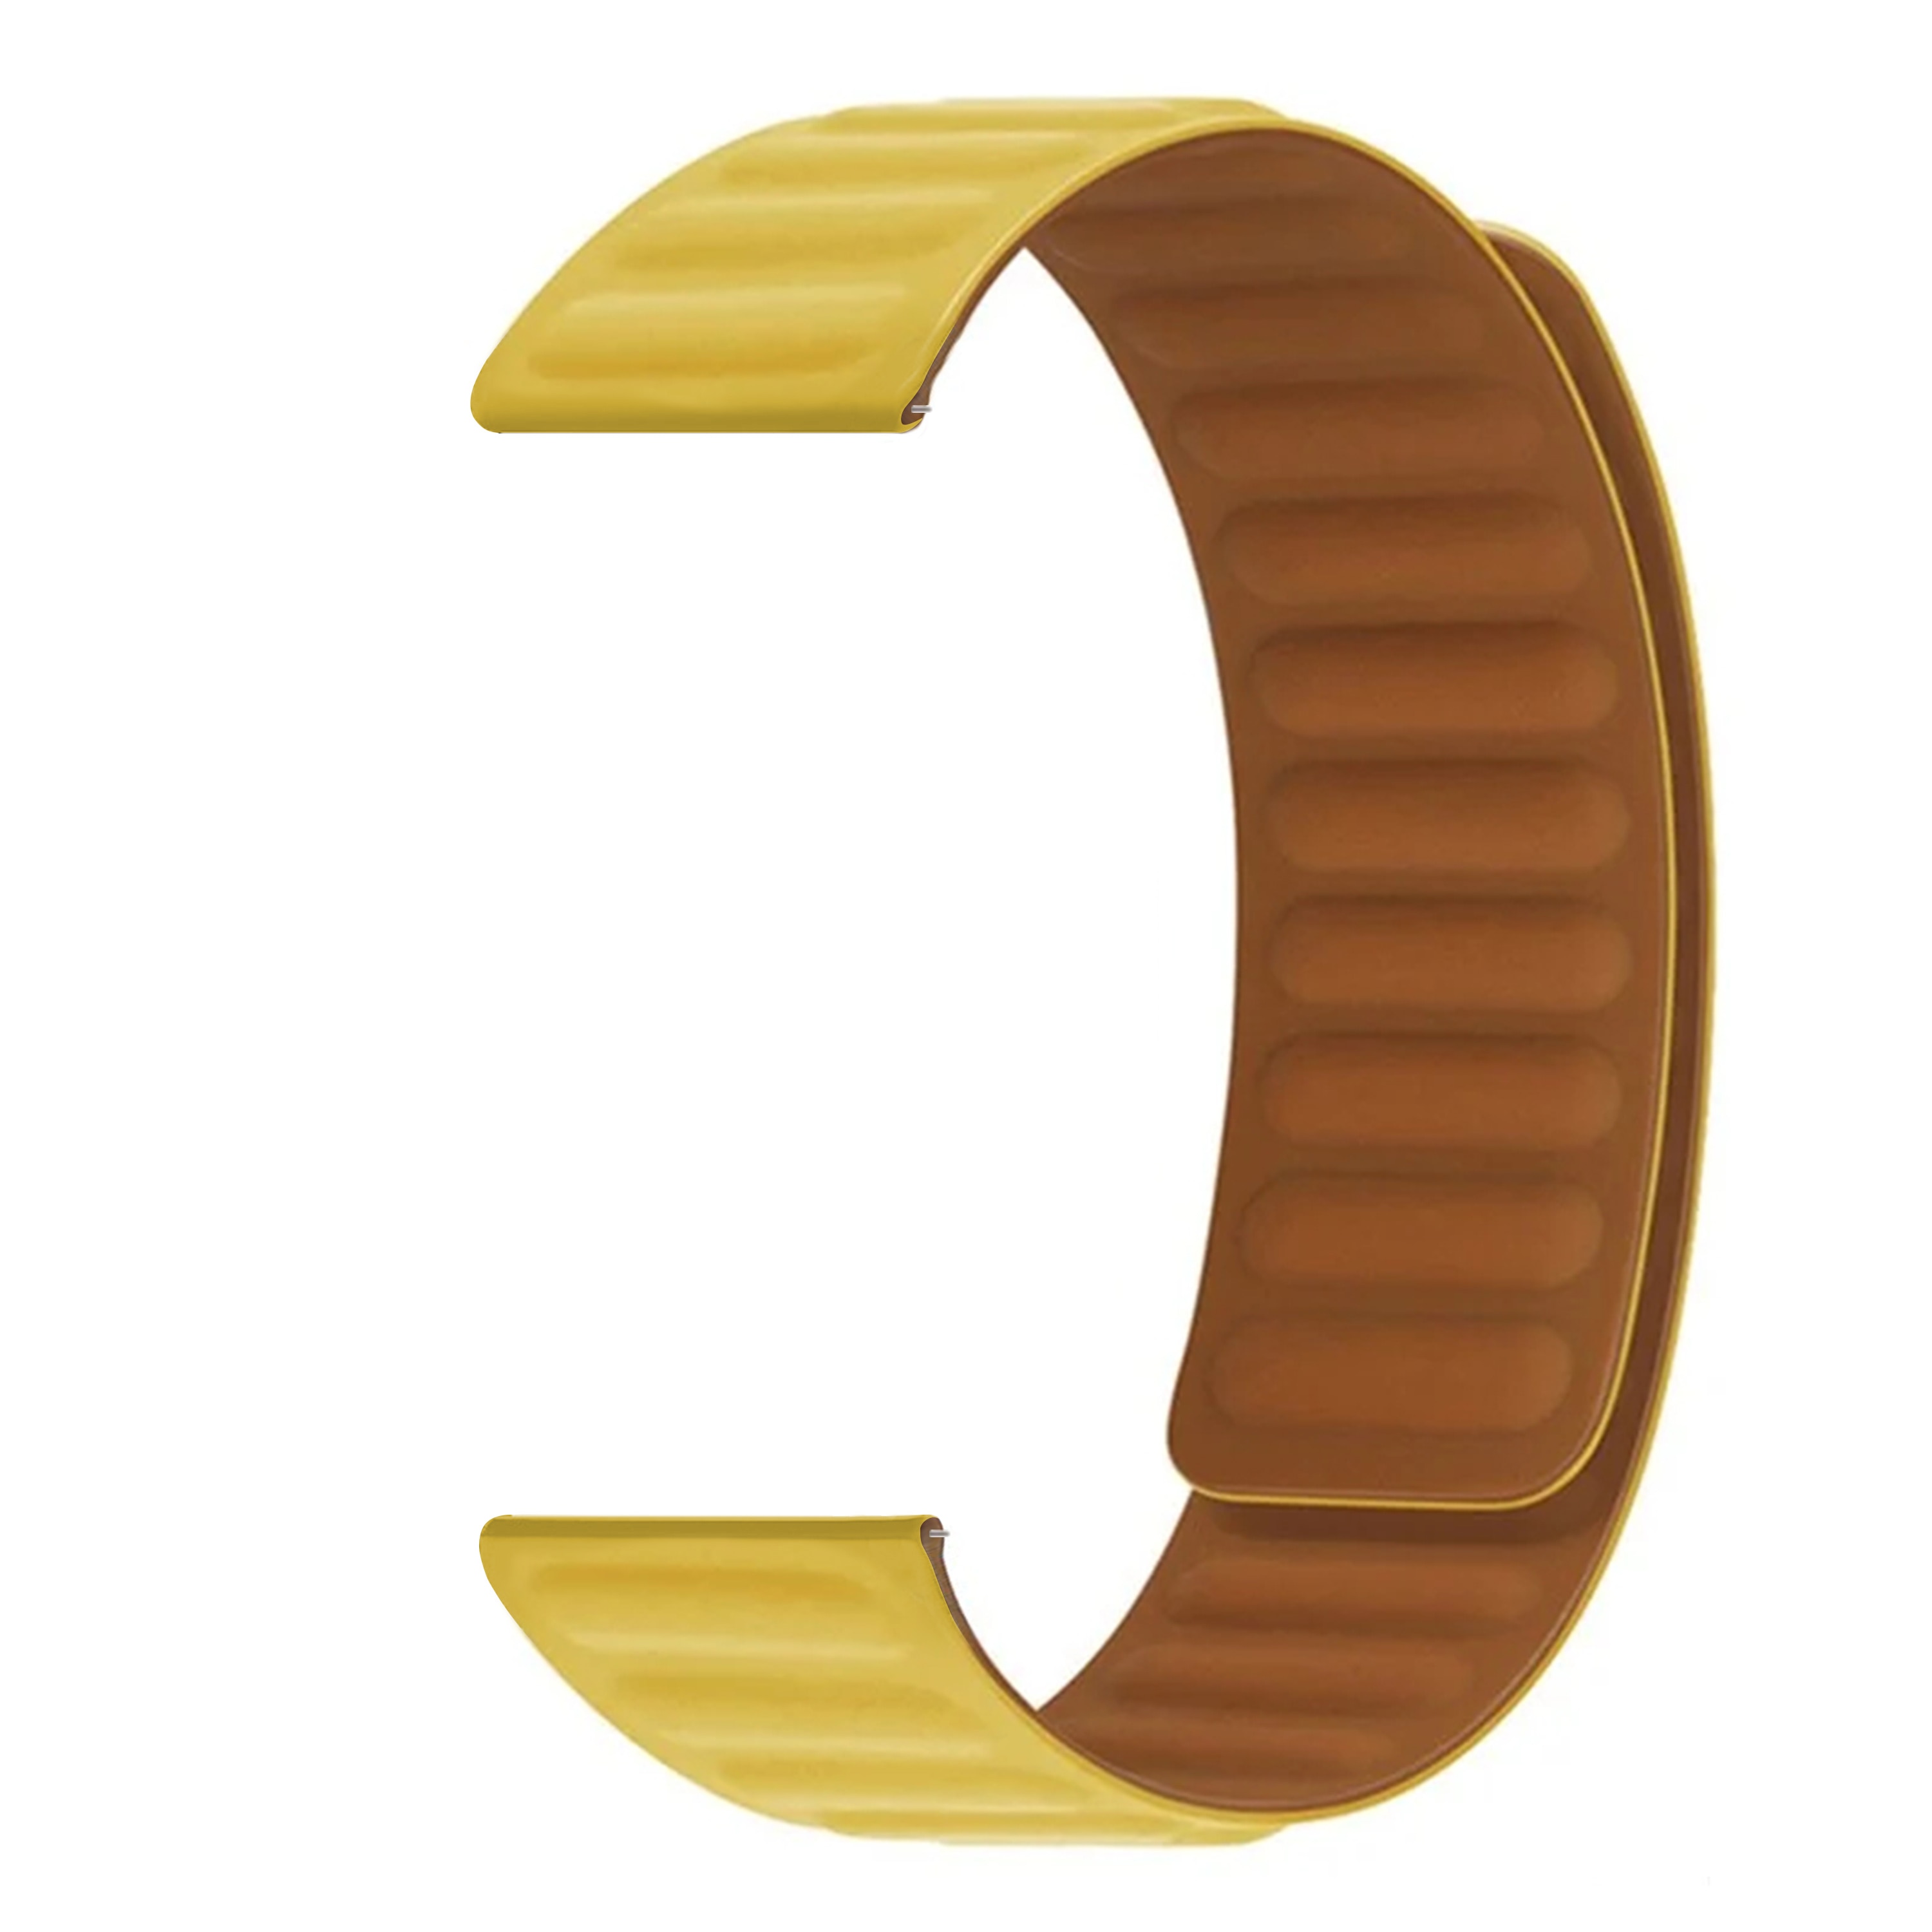 Bracelet magnétique en silicone Suunto 9 Peak Pro, jaune